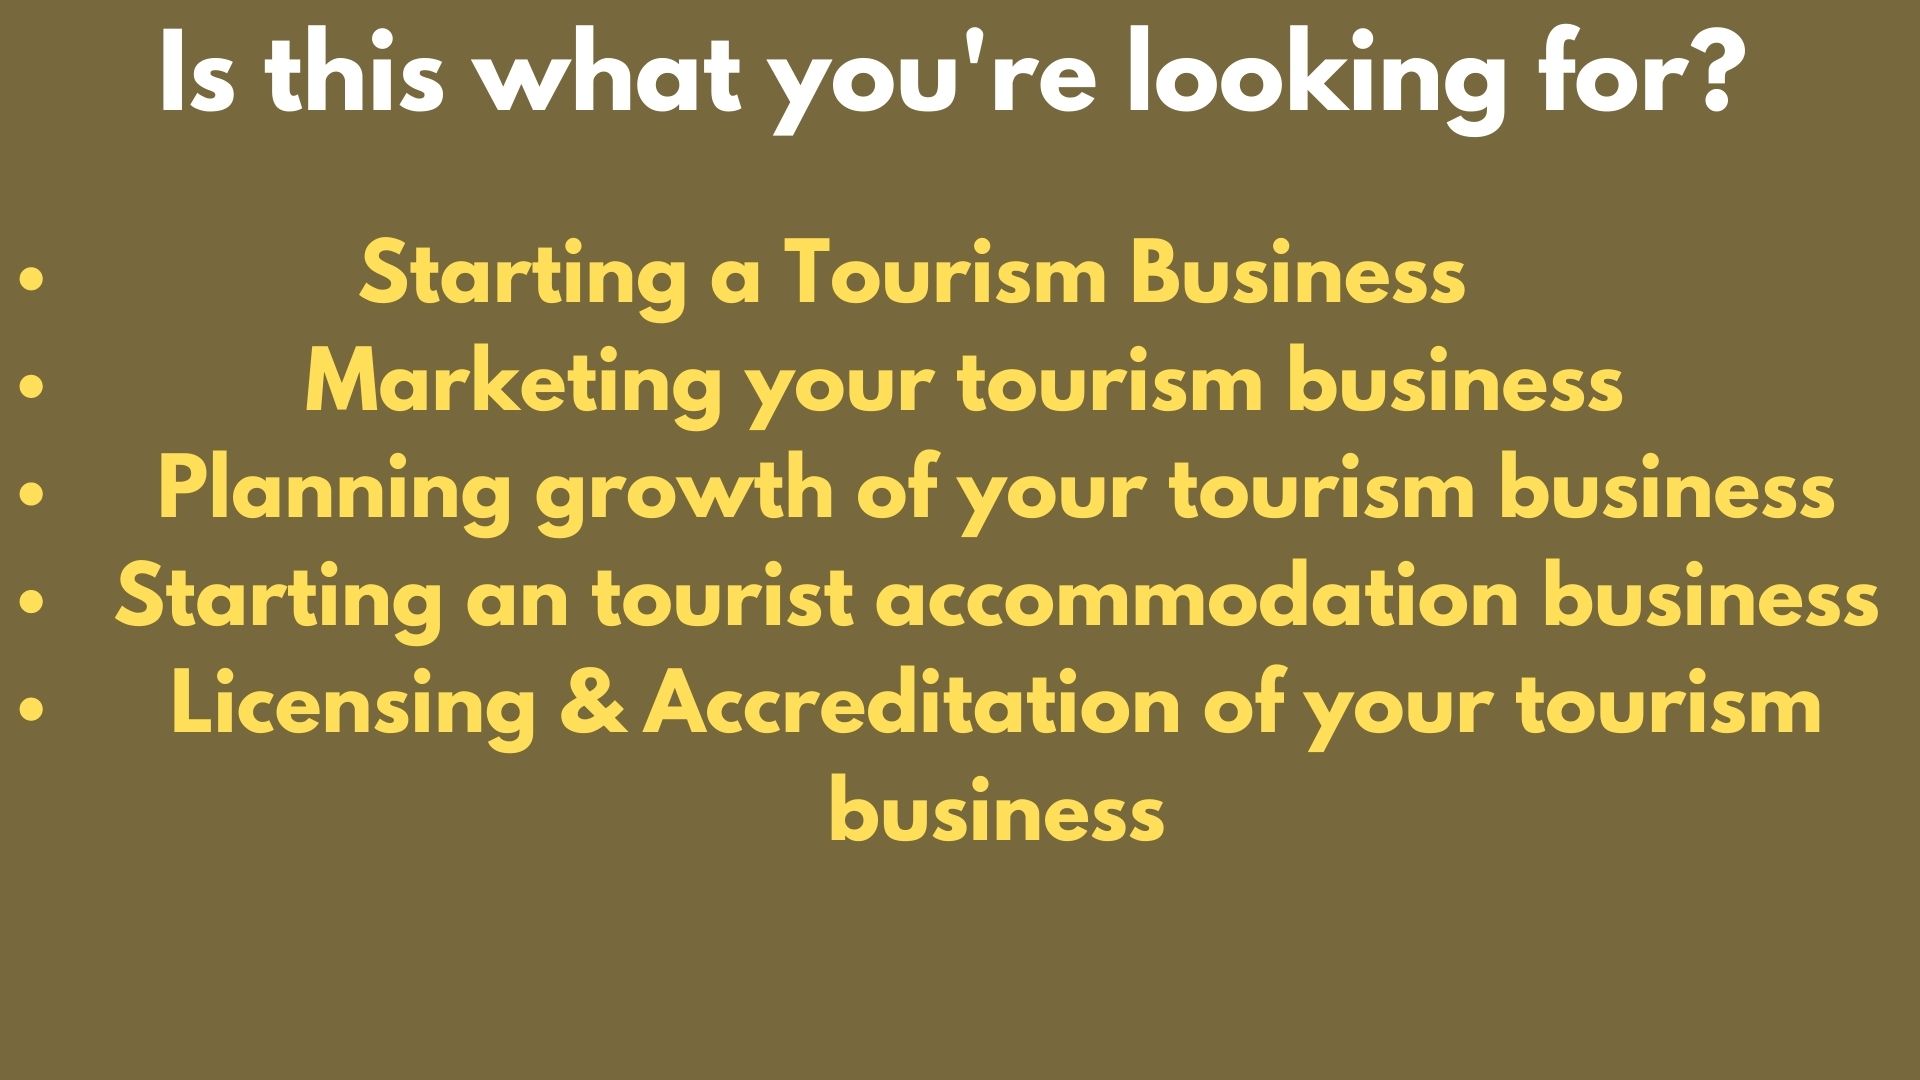 Starting A Tourism Business In Uganda